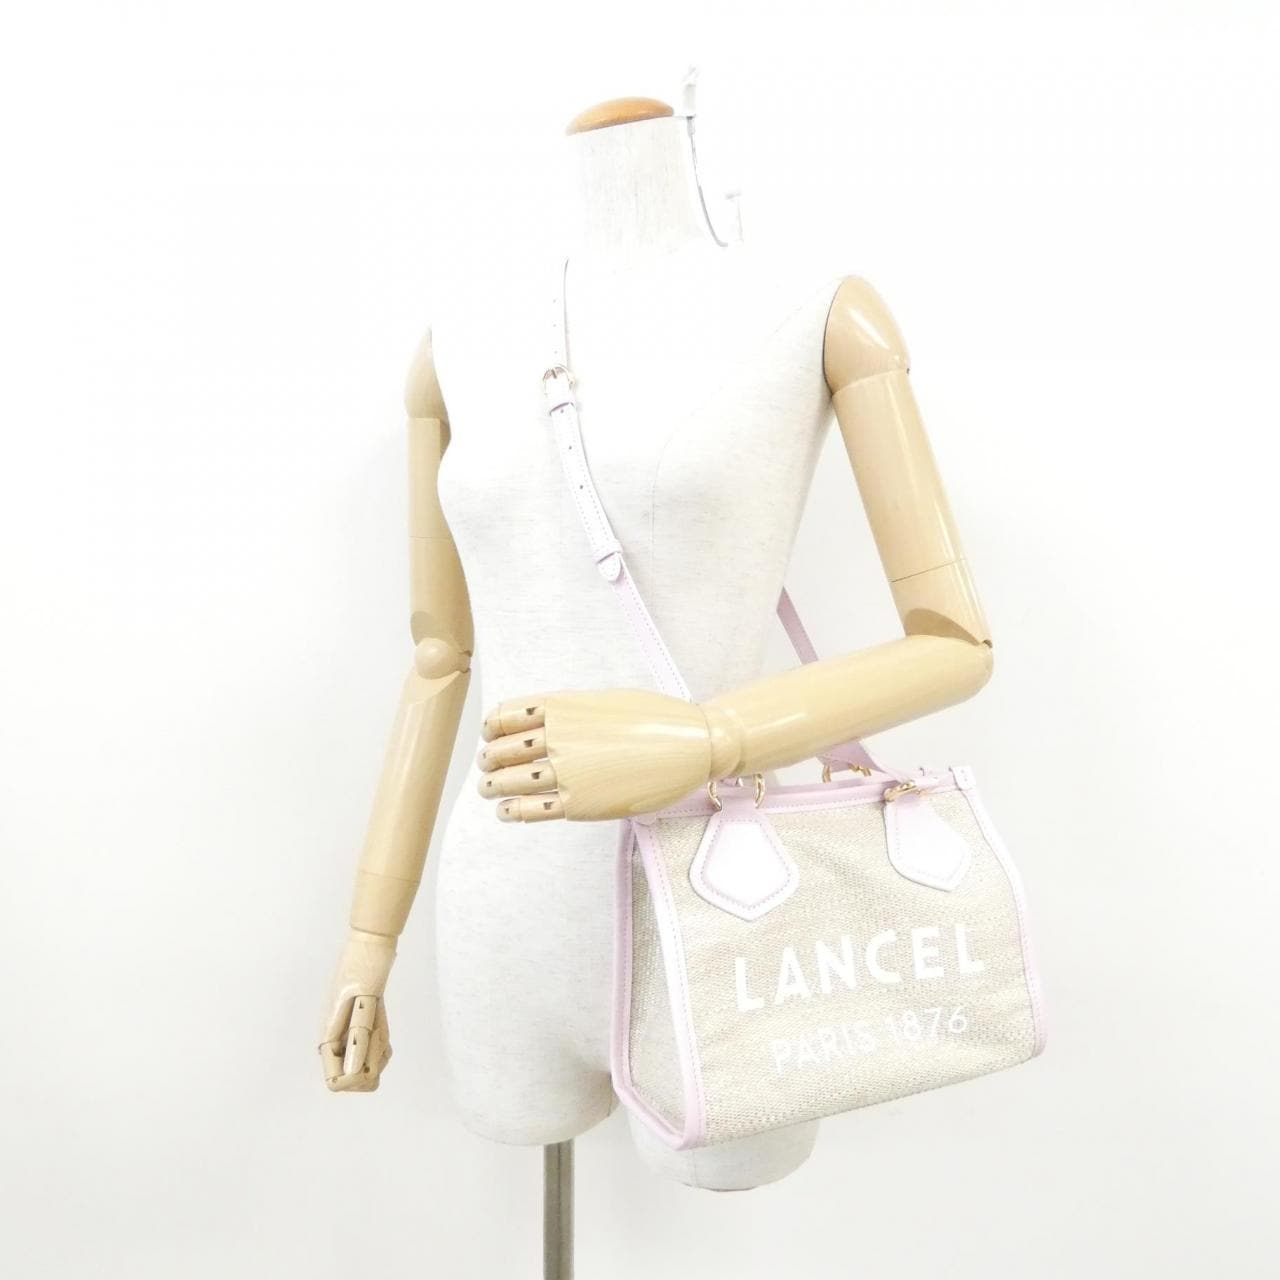 [BRAND NEW] Lancel A12006 Bag